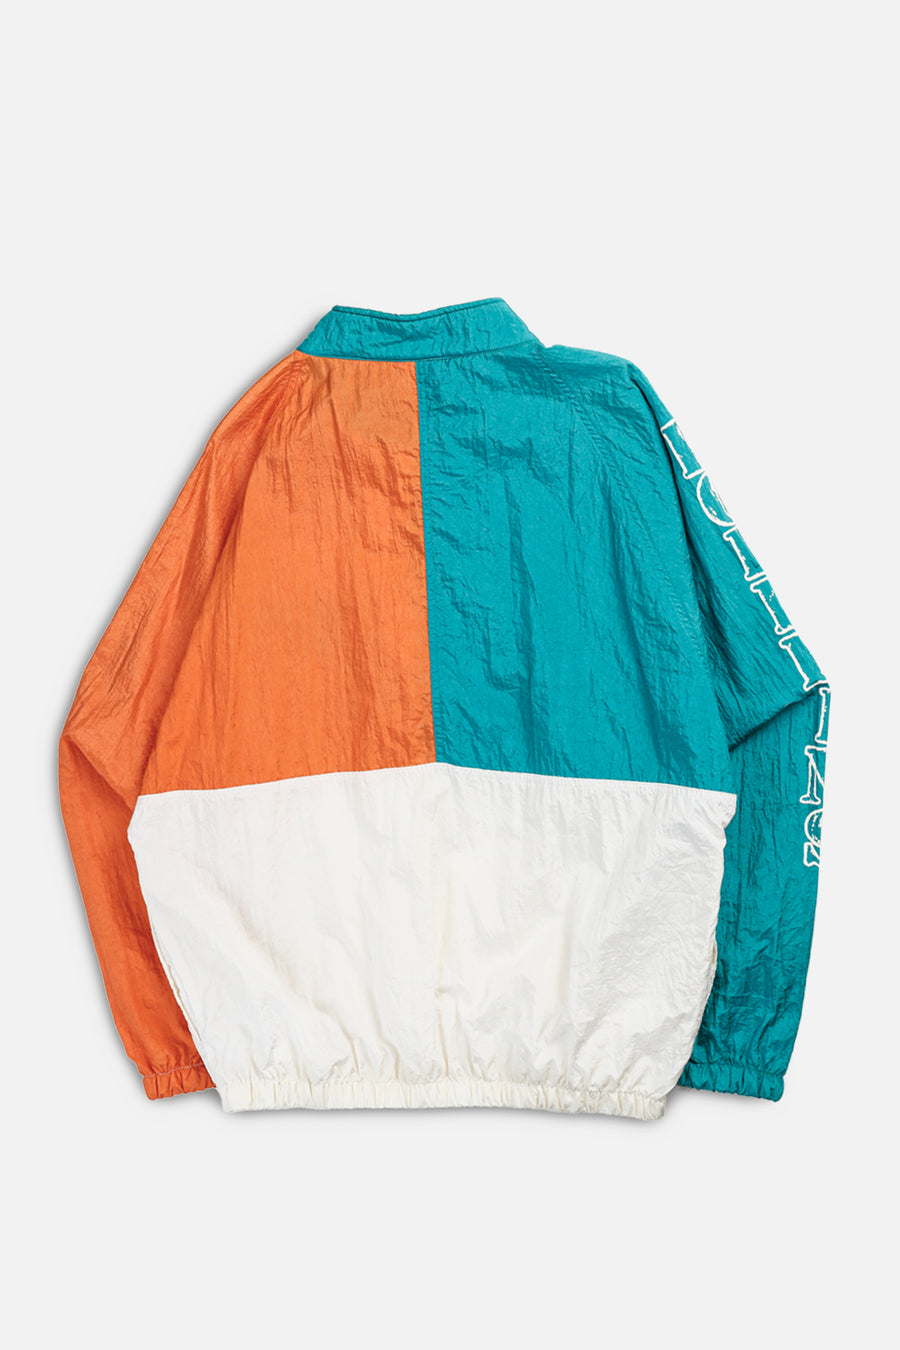 Vintage Miami Dolphins NFL Windbreaker Jacket - XL